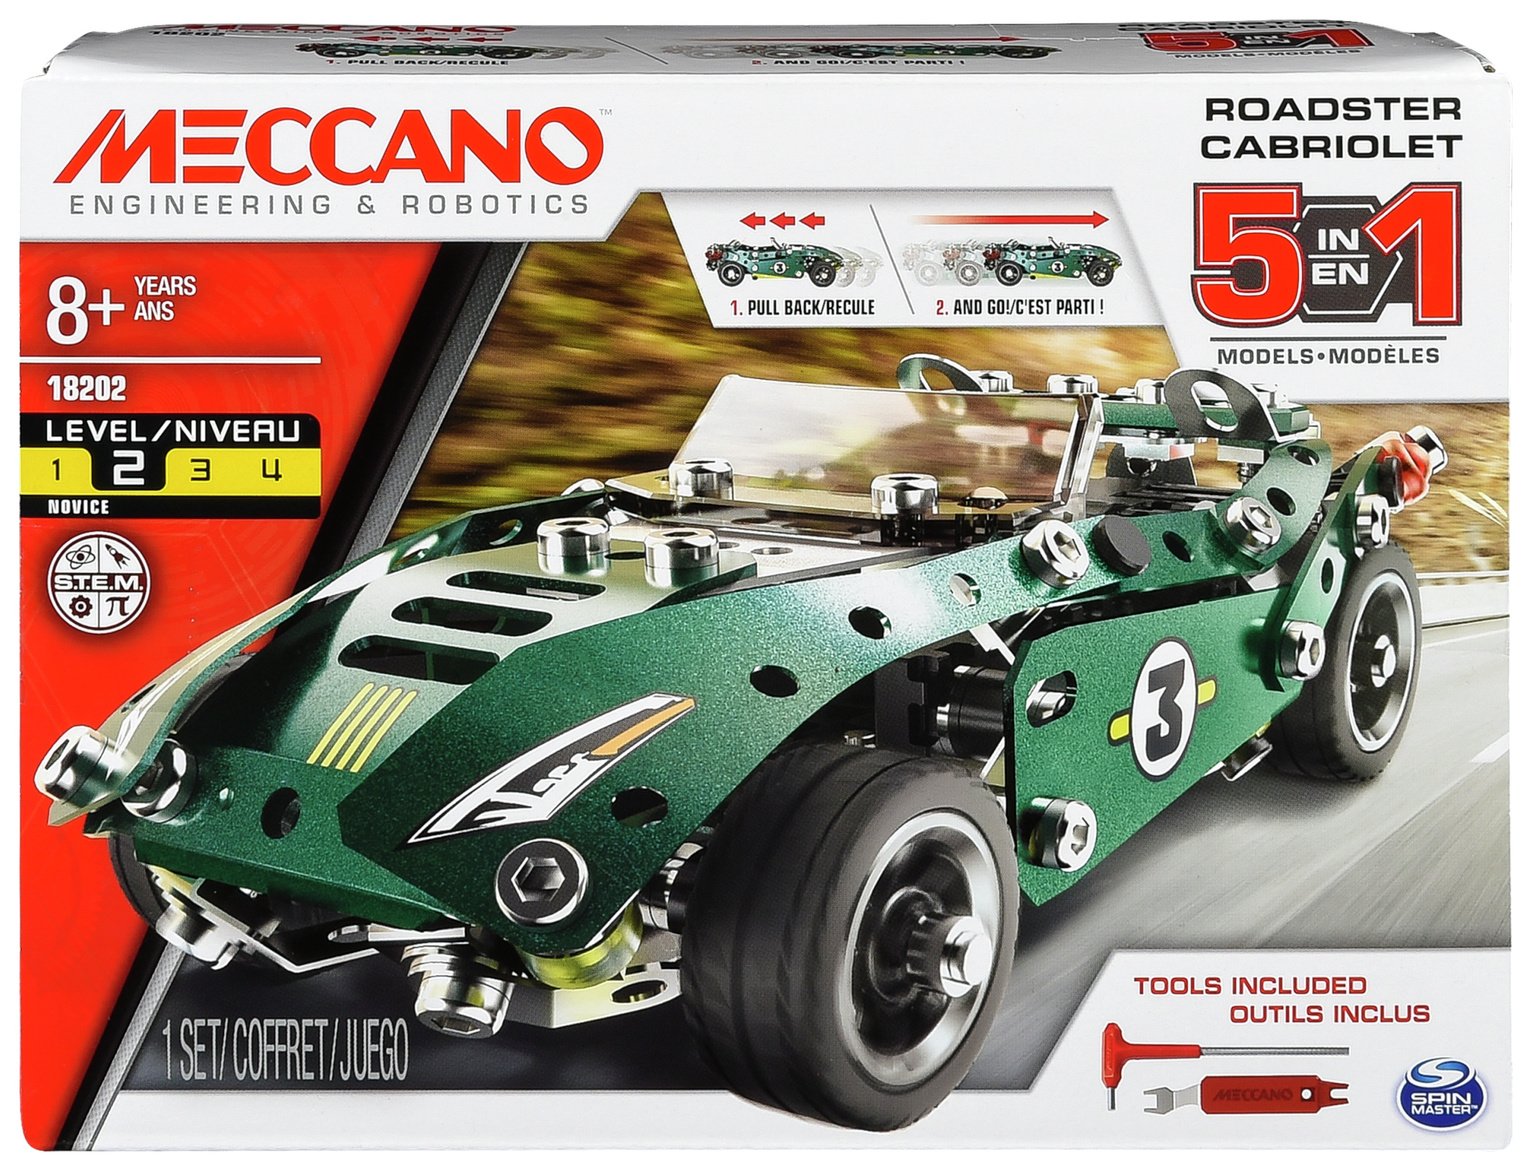 meccano roadster 5 in 1